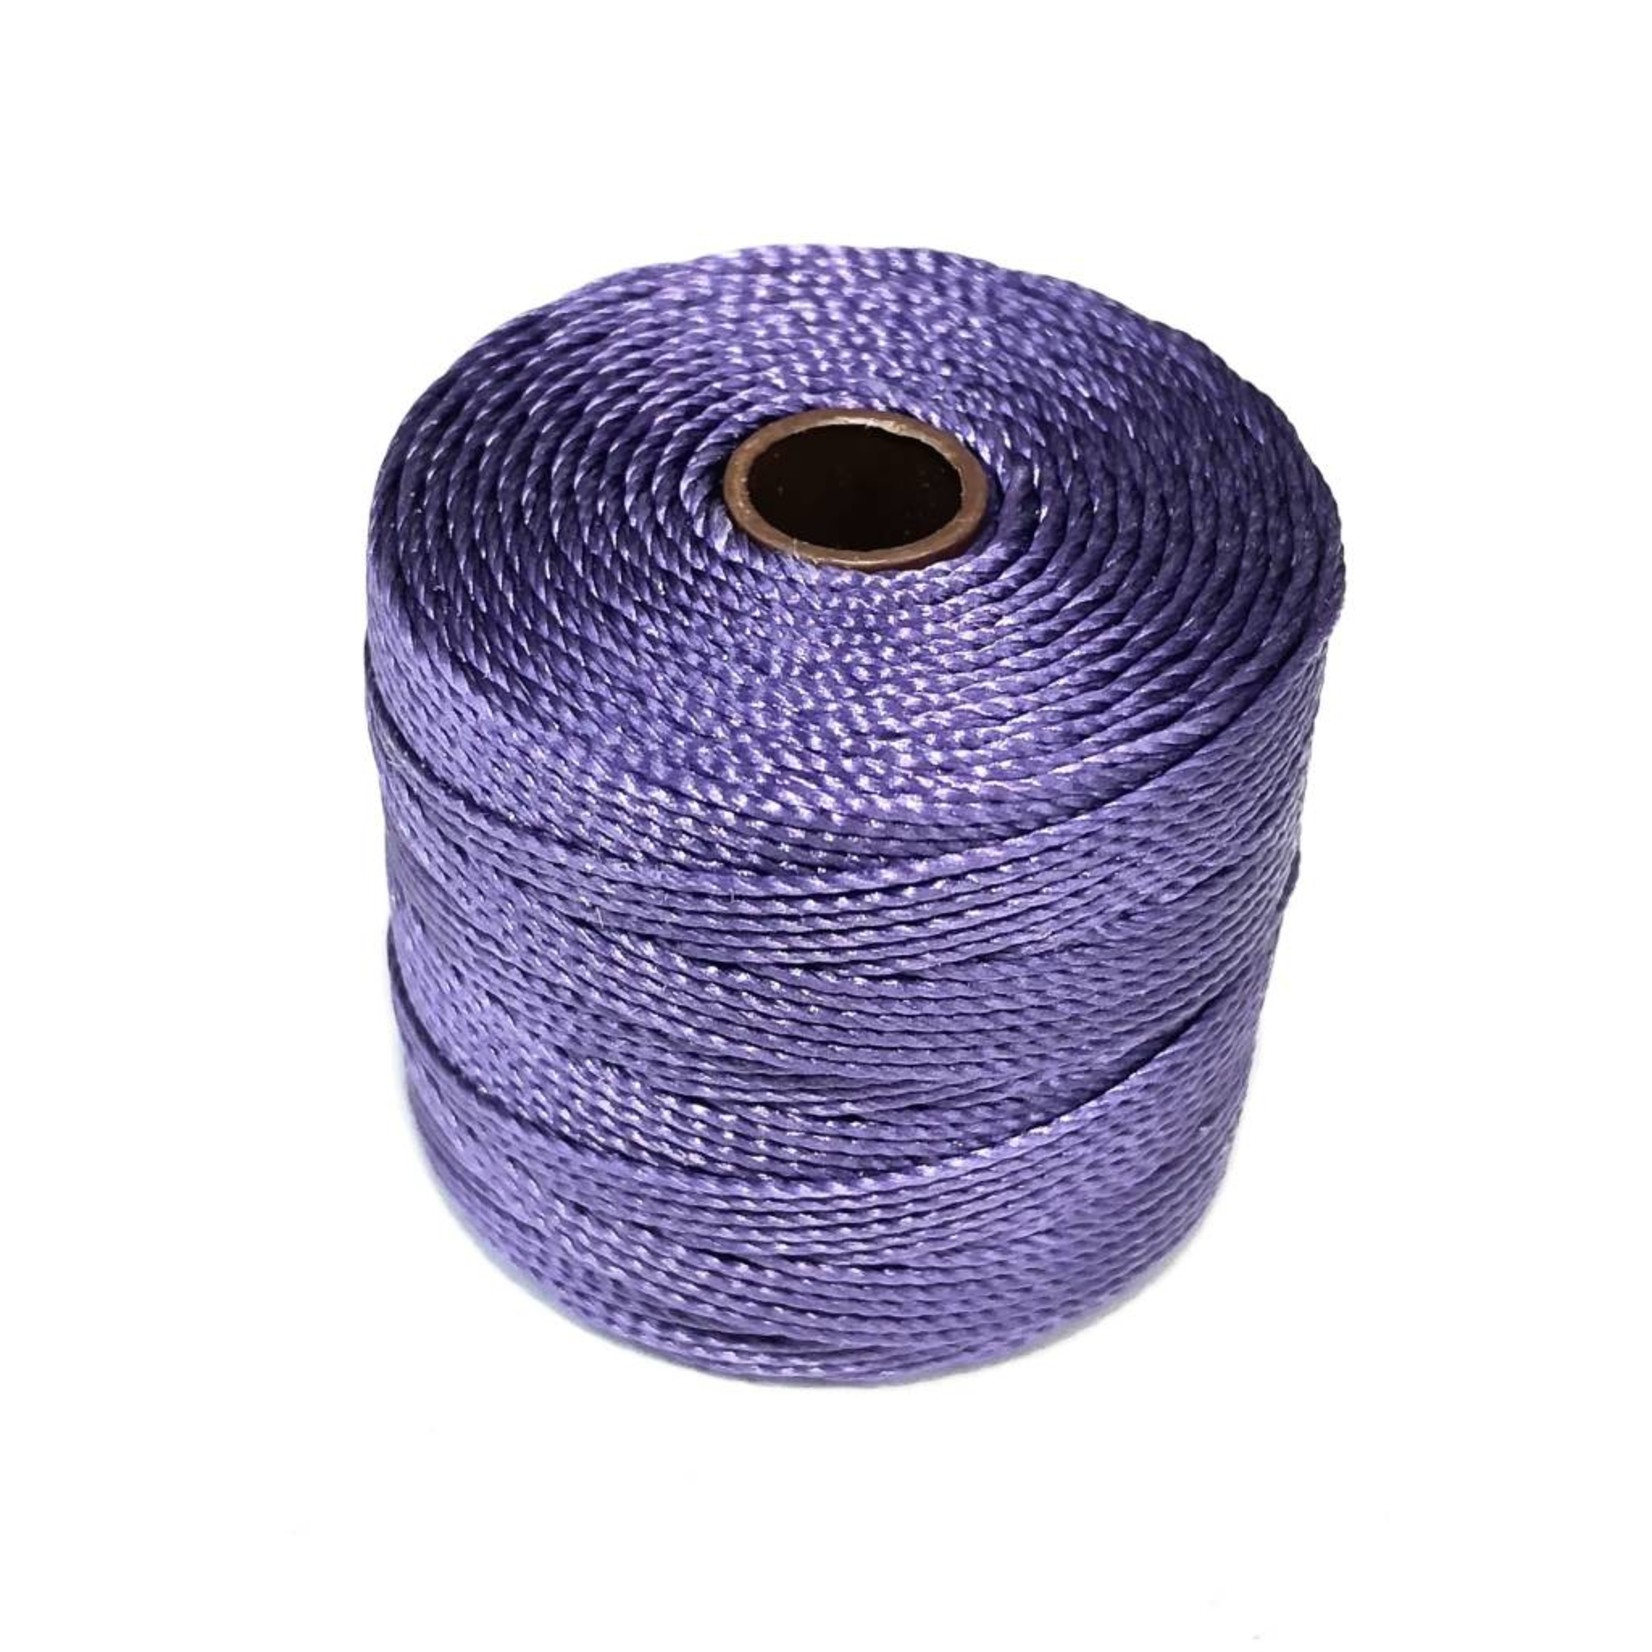 S-Lon Nylon Bead Cord Medium Purple  77Yd Roll